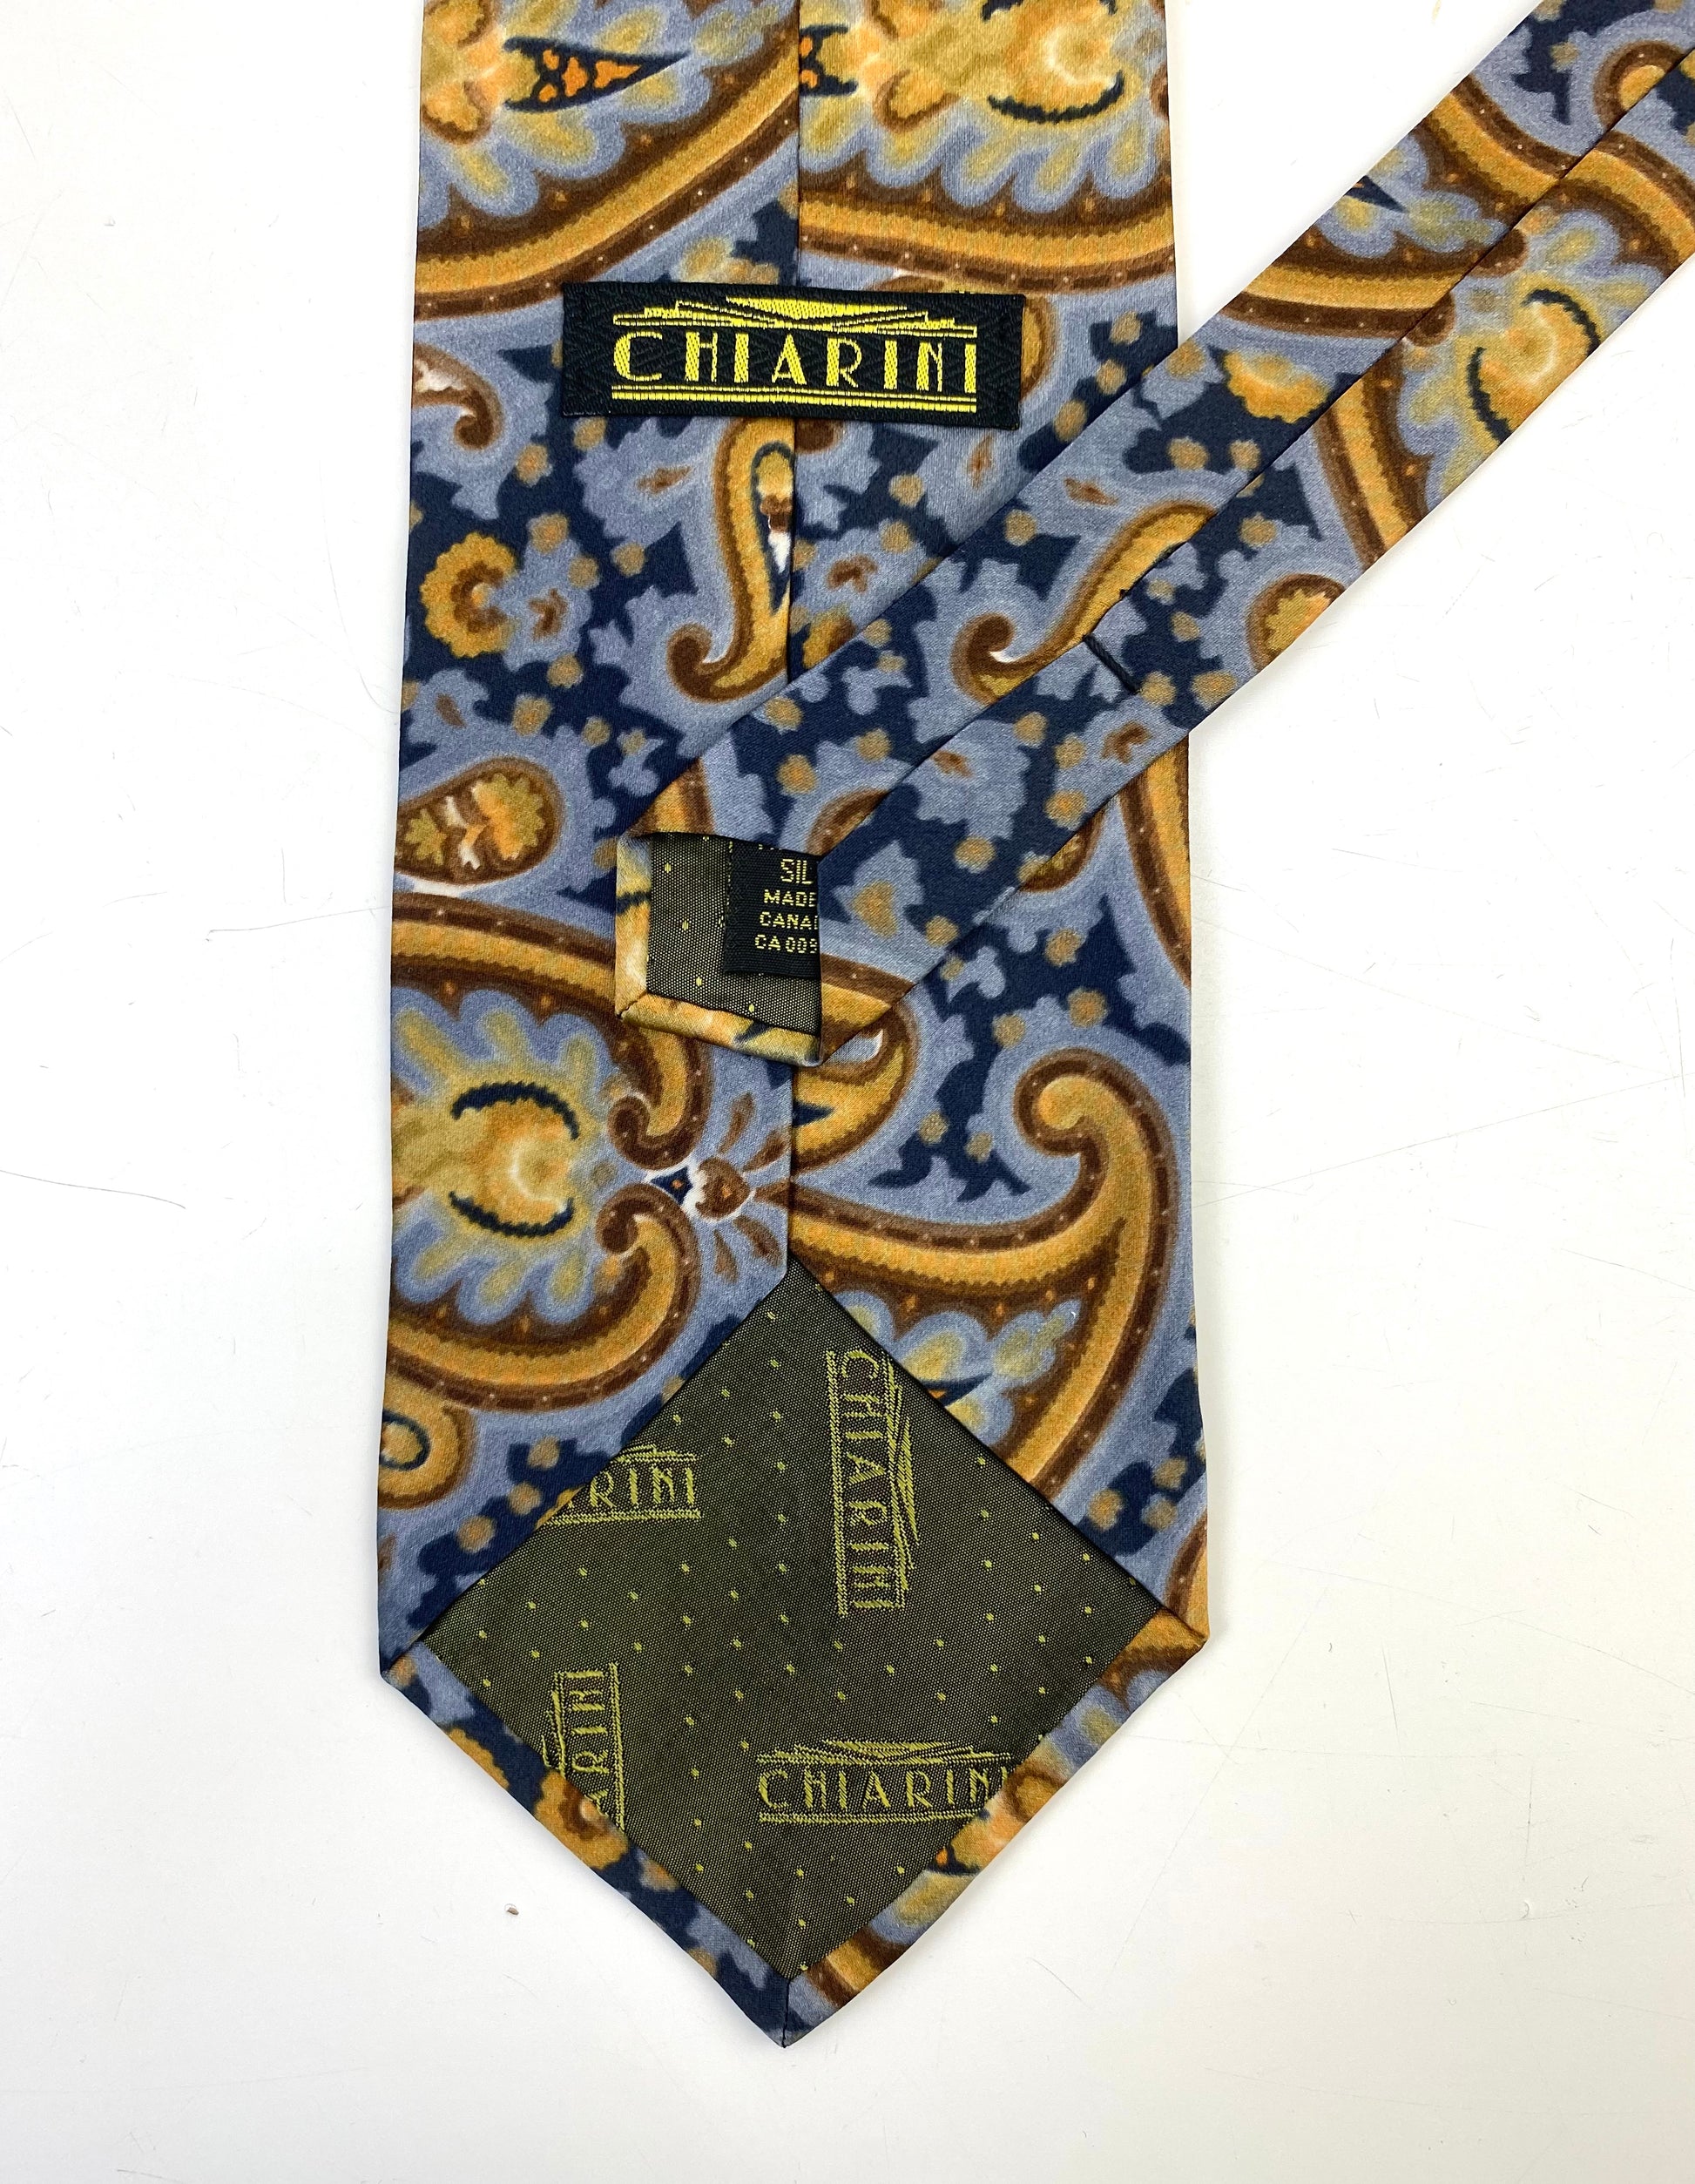 90s Deadstock Silk Necktie, Men's Vintage Gold/ Blue Paisley Pattern Tie, NOS